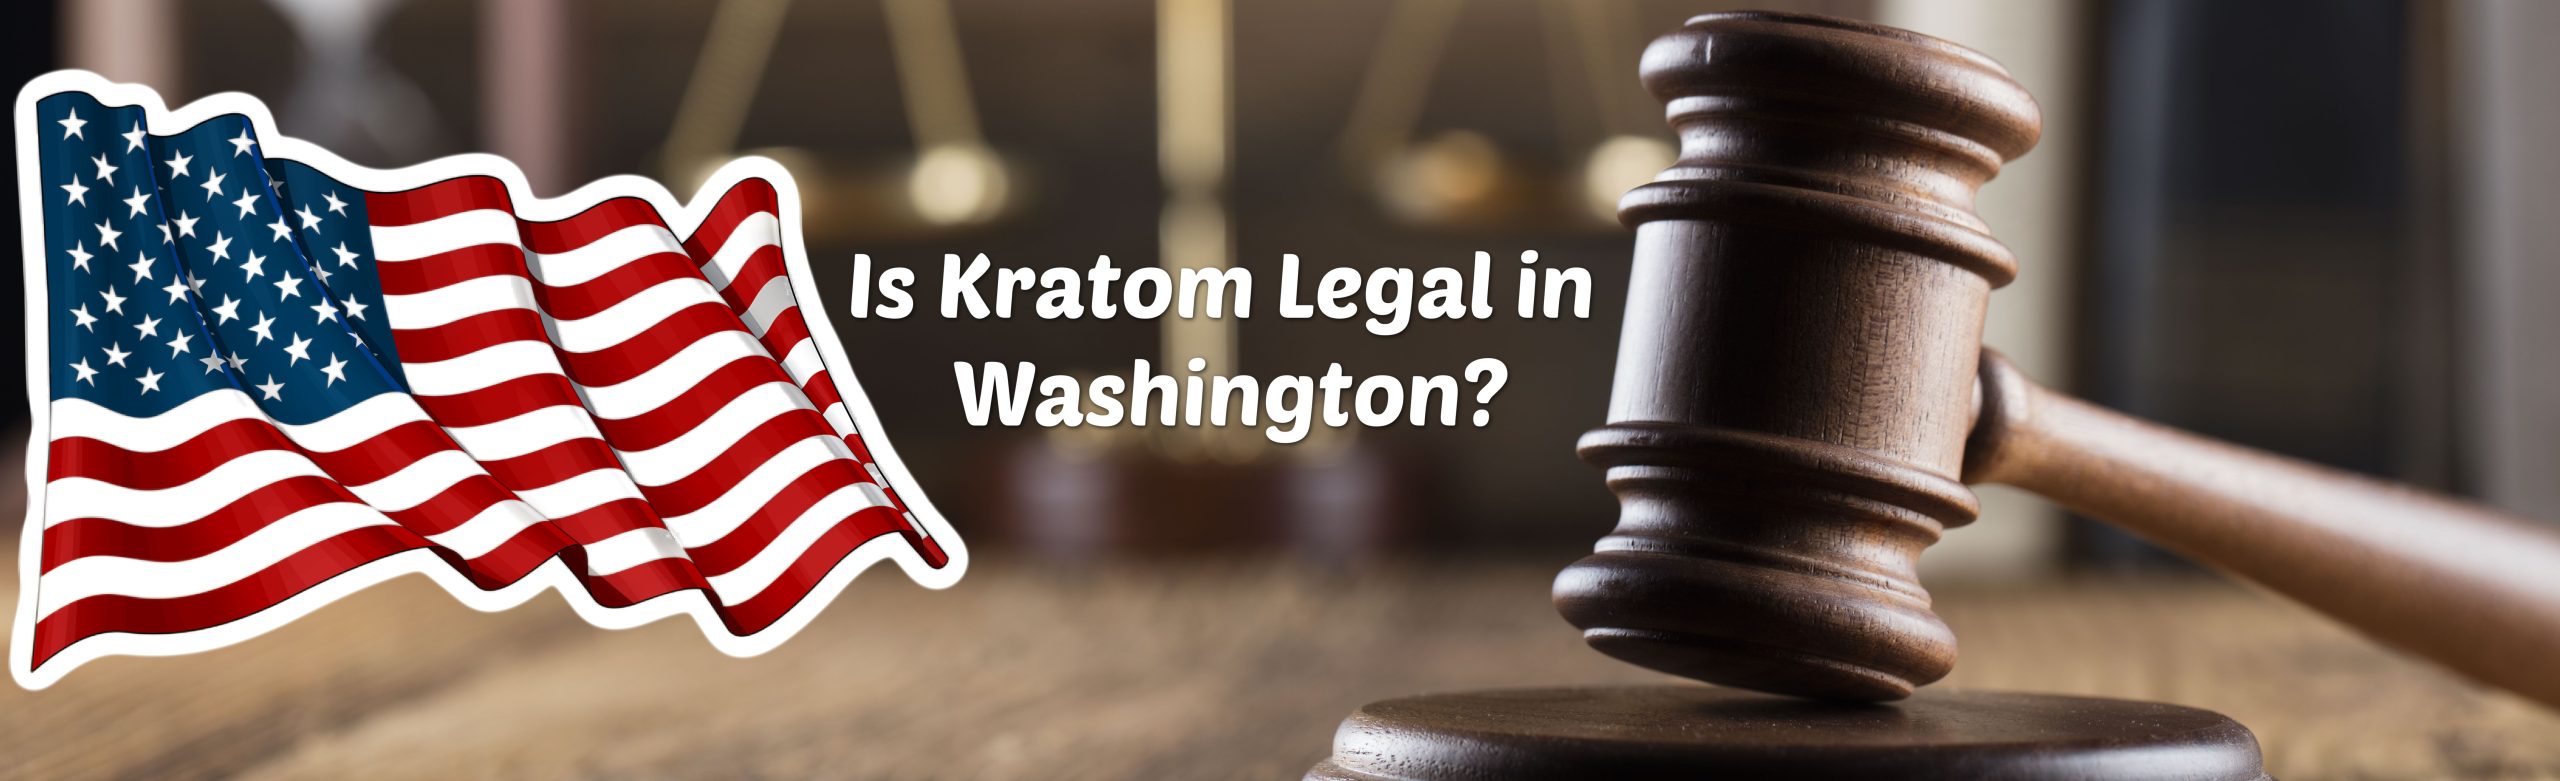 image of is kratom legal in washington